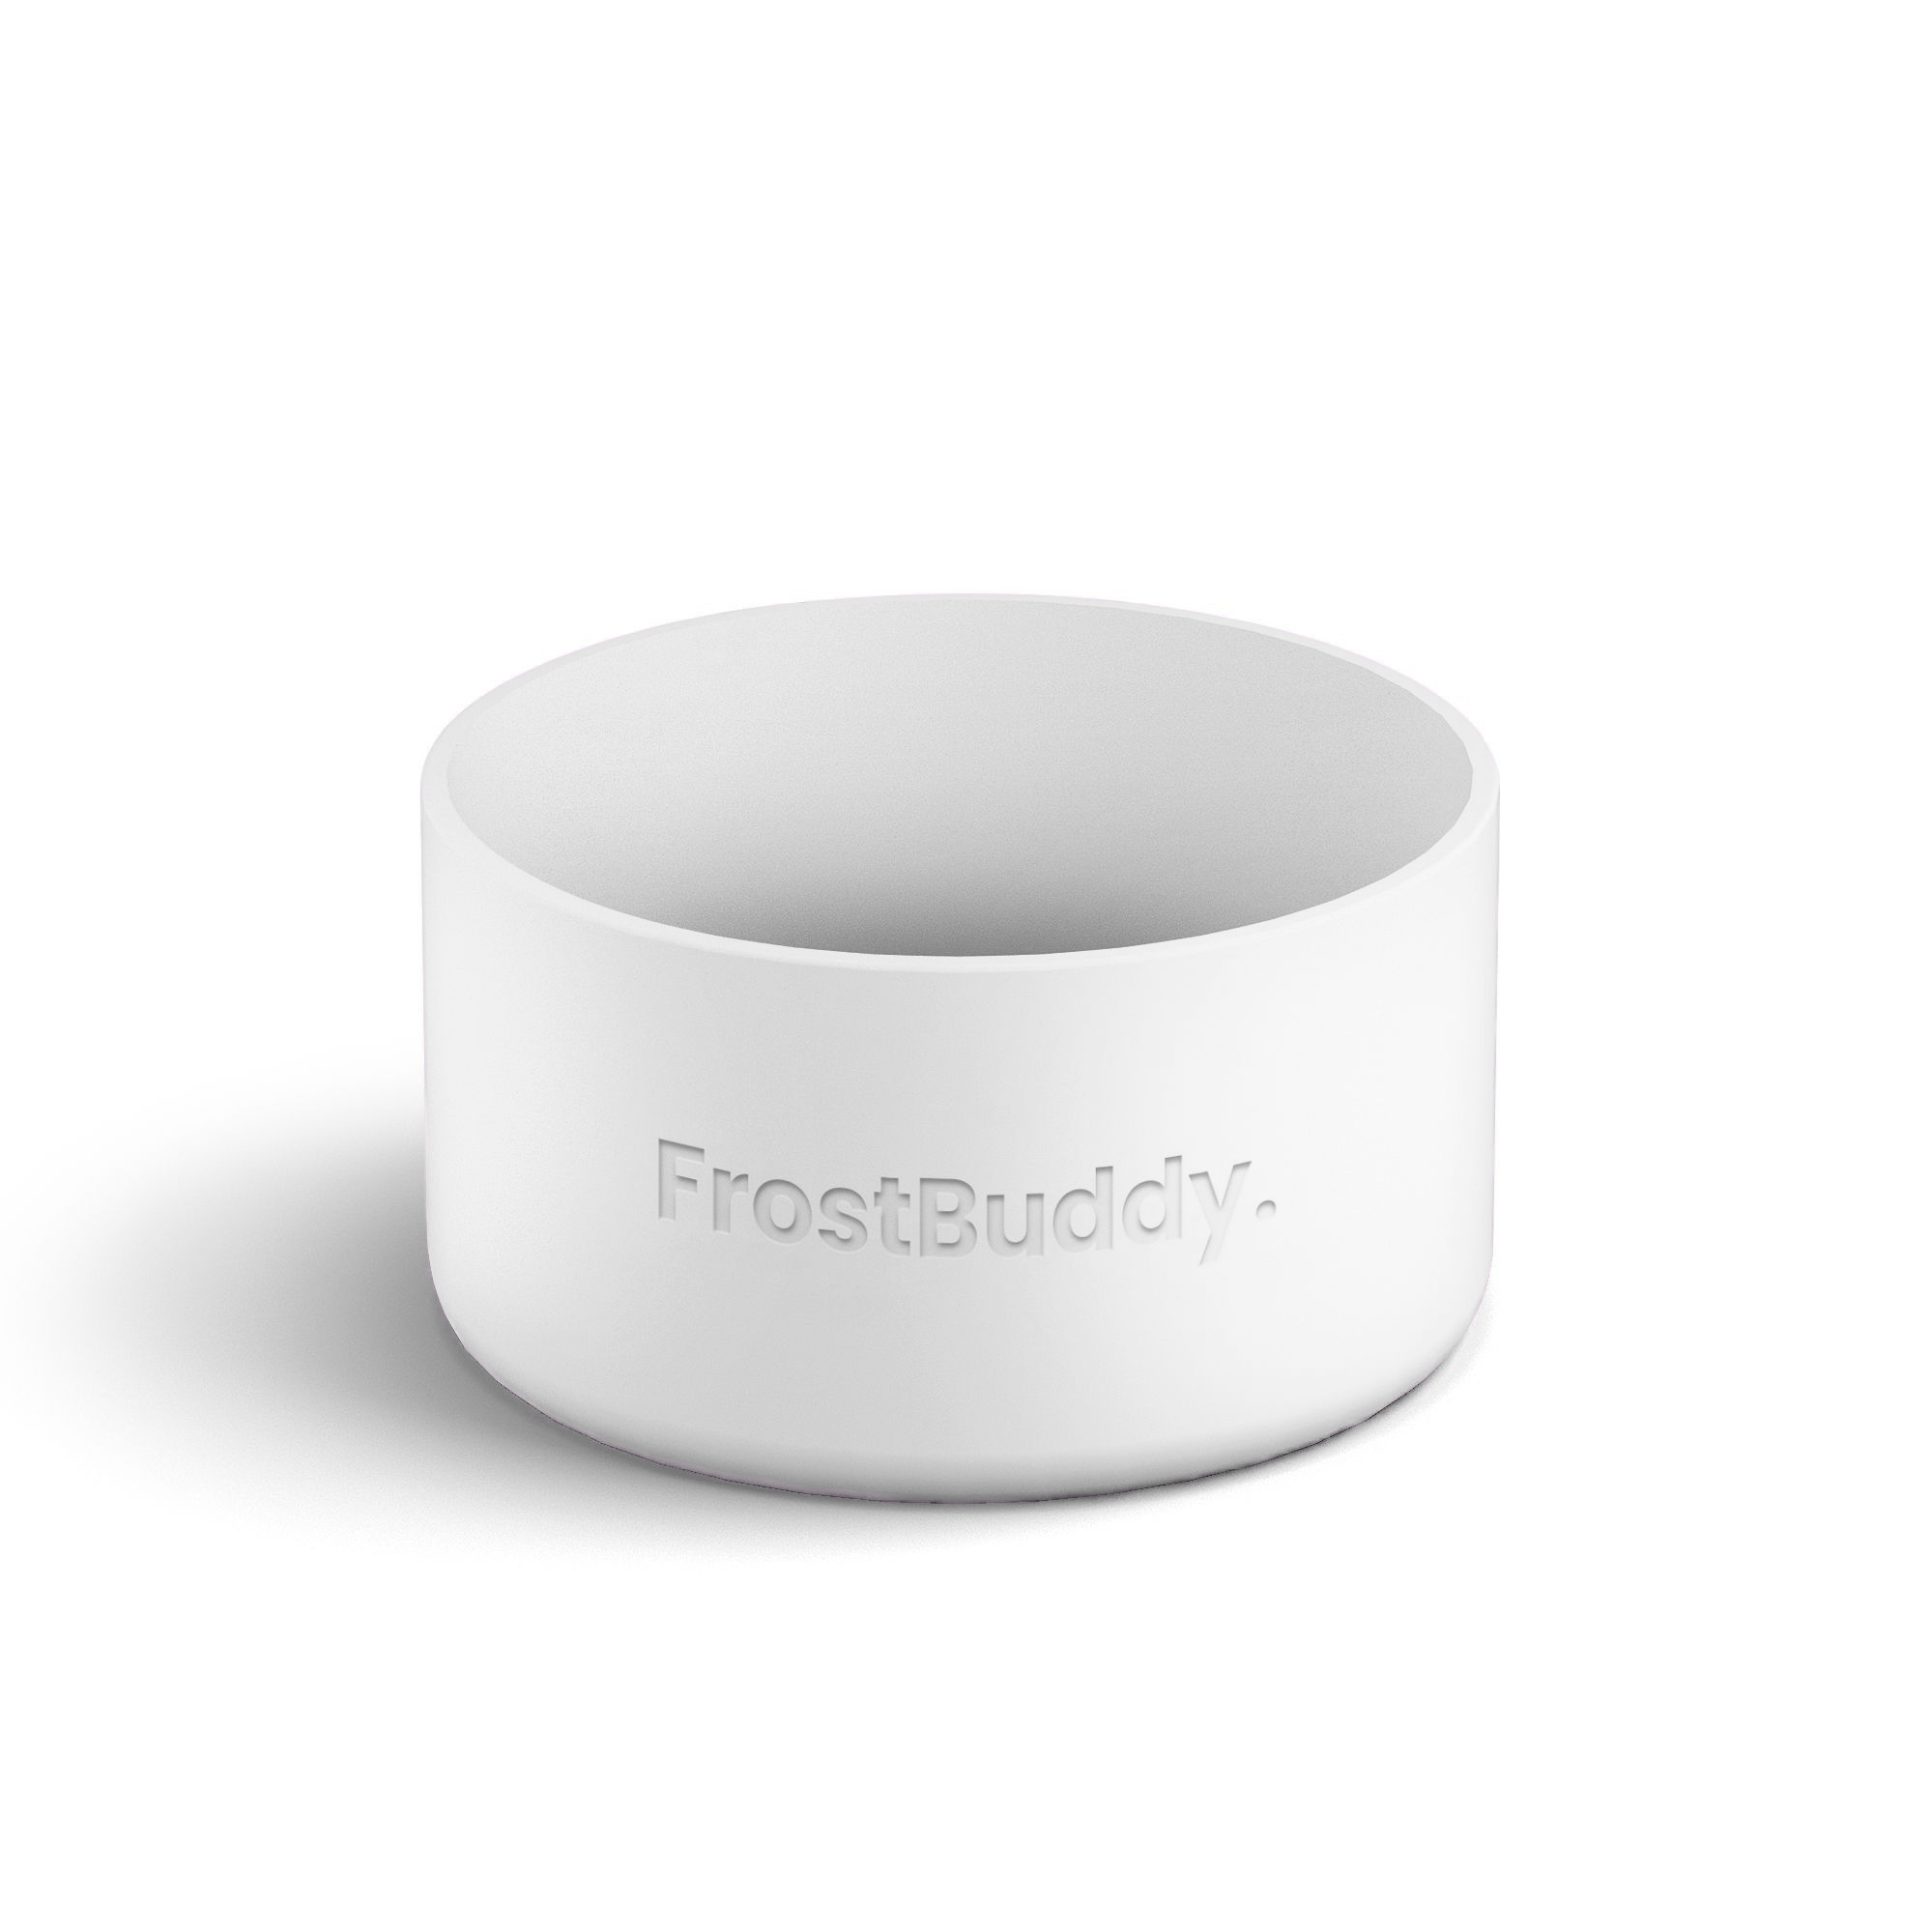 Frost Buddy – Stateline Promotions